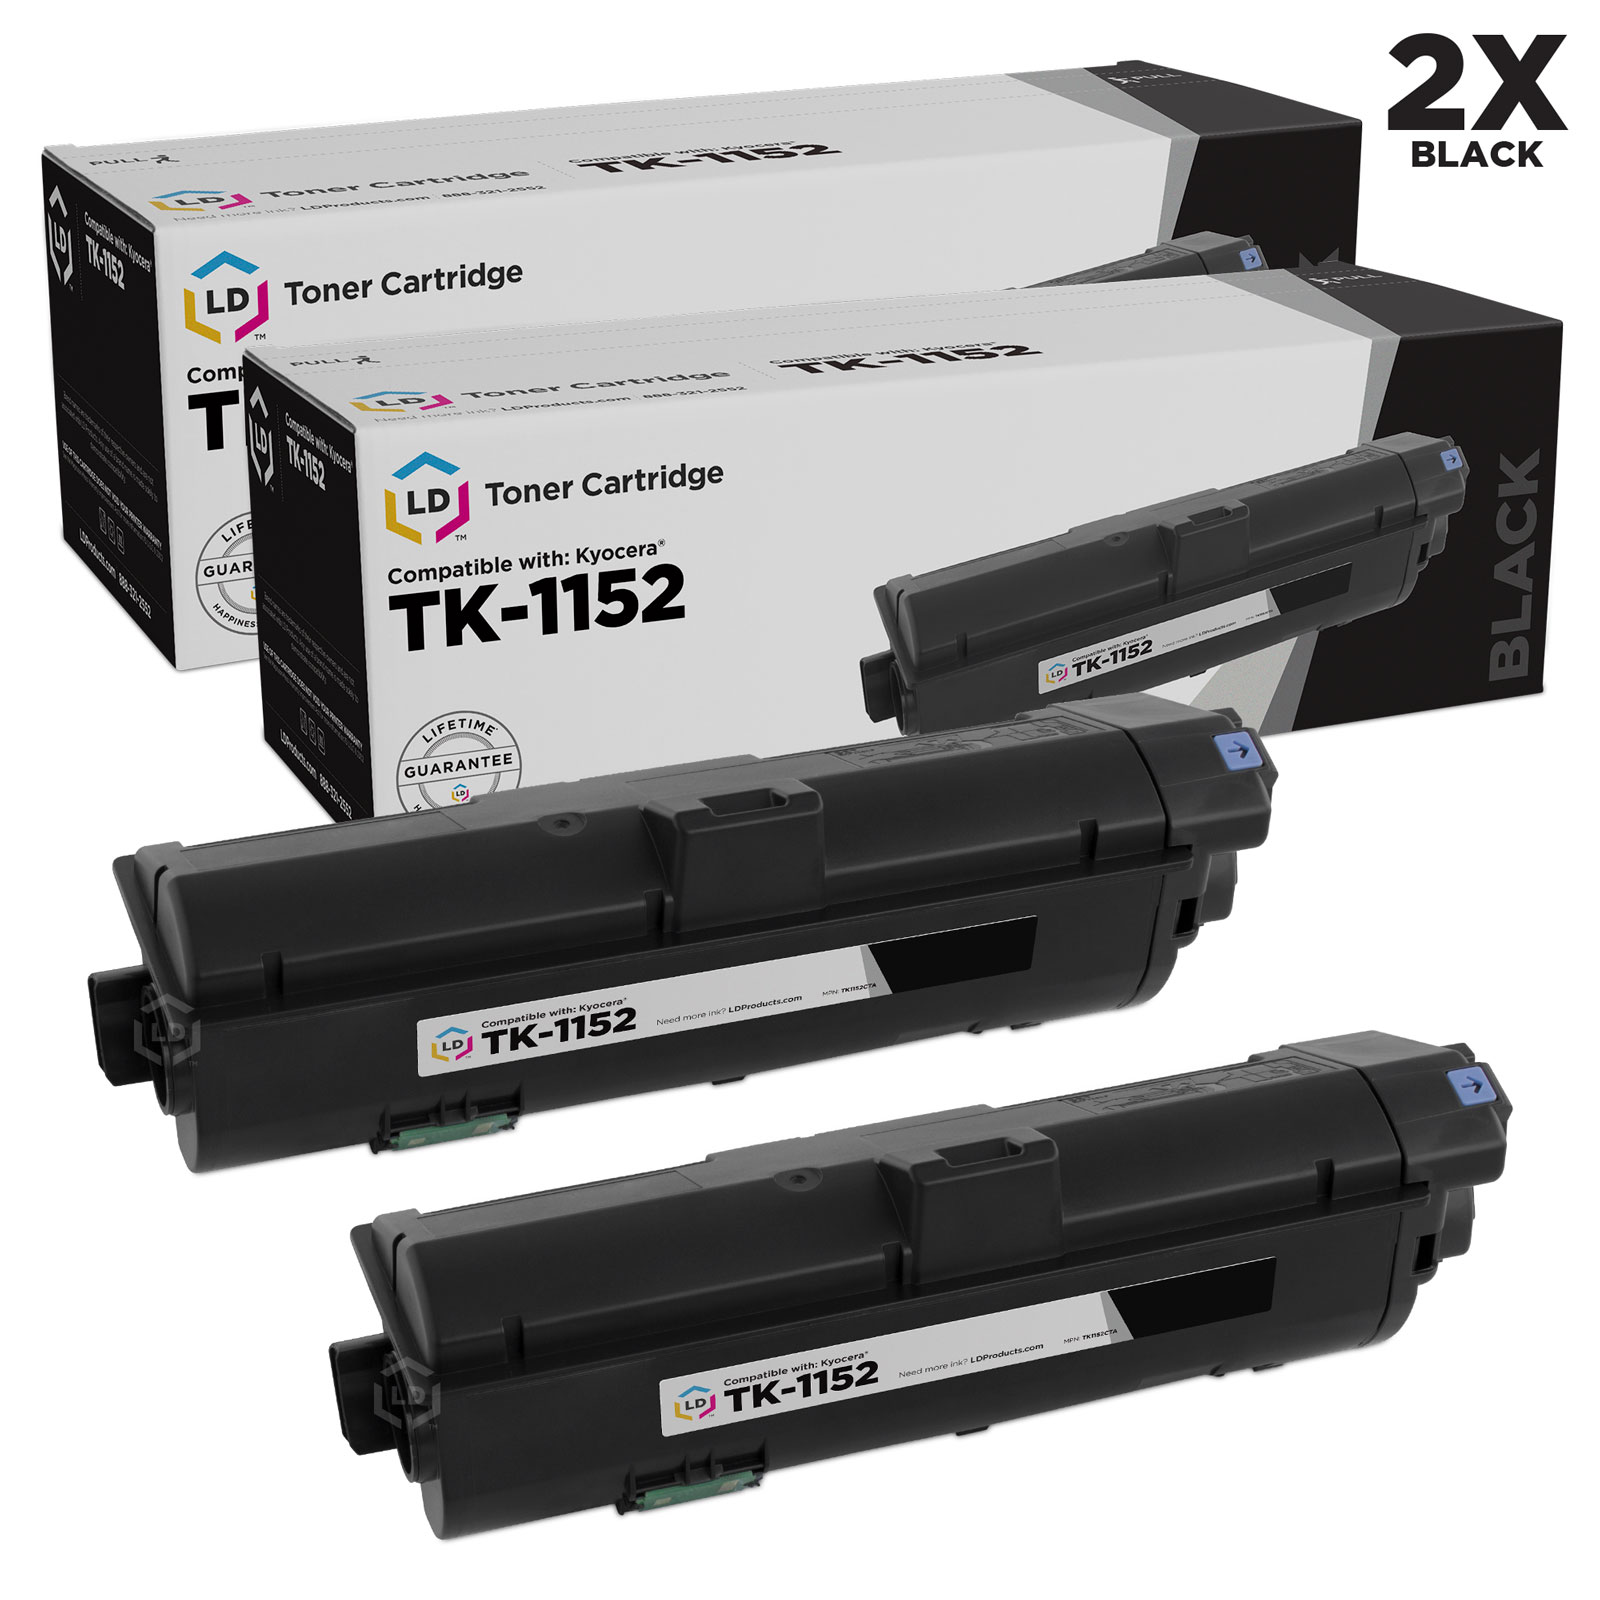 LD Compatible Kyocera TK-1152 (1T02RV0US0) Pack of 2 Black Laser Toner Cartridges for use in M2635dw - image 1 of 2